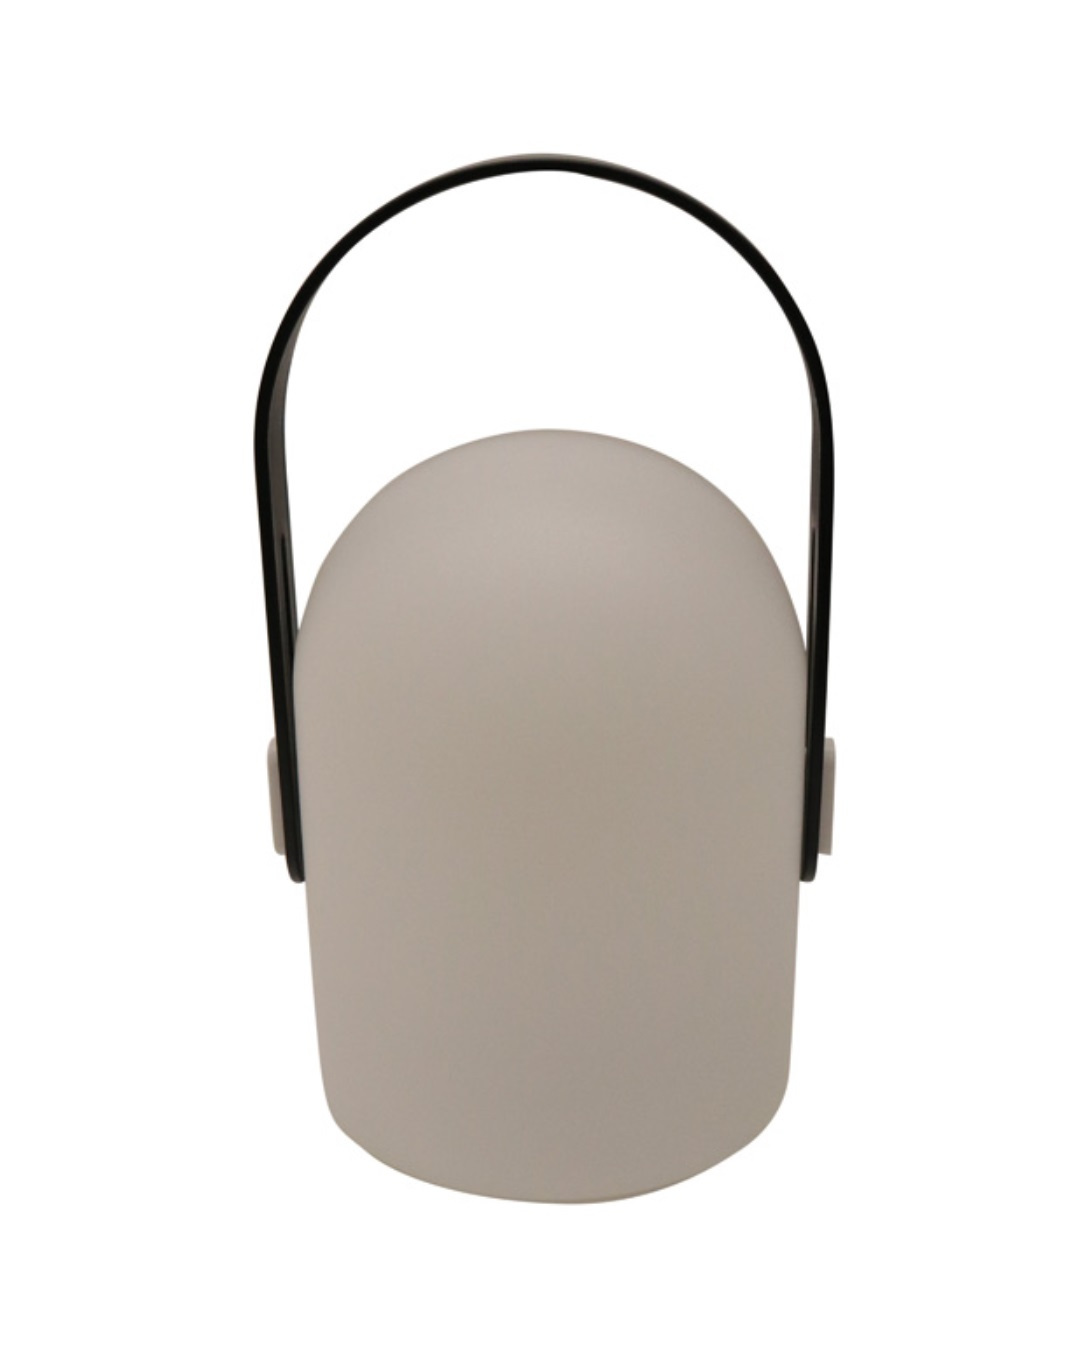 Lantern shaped light white with black handle